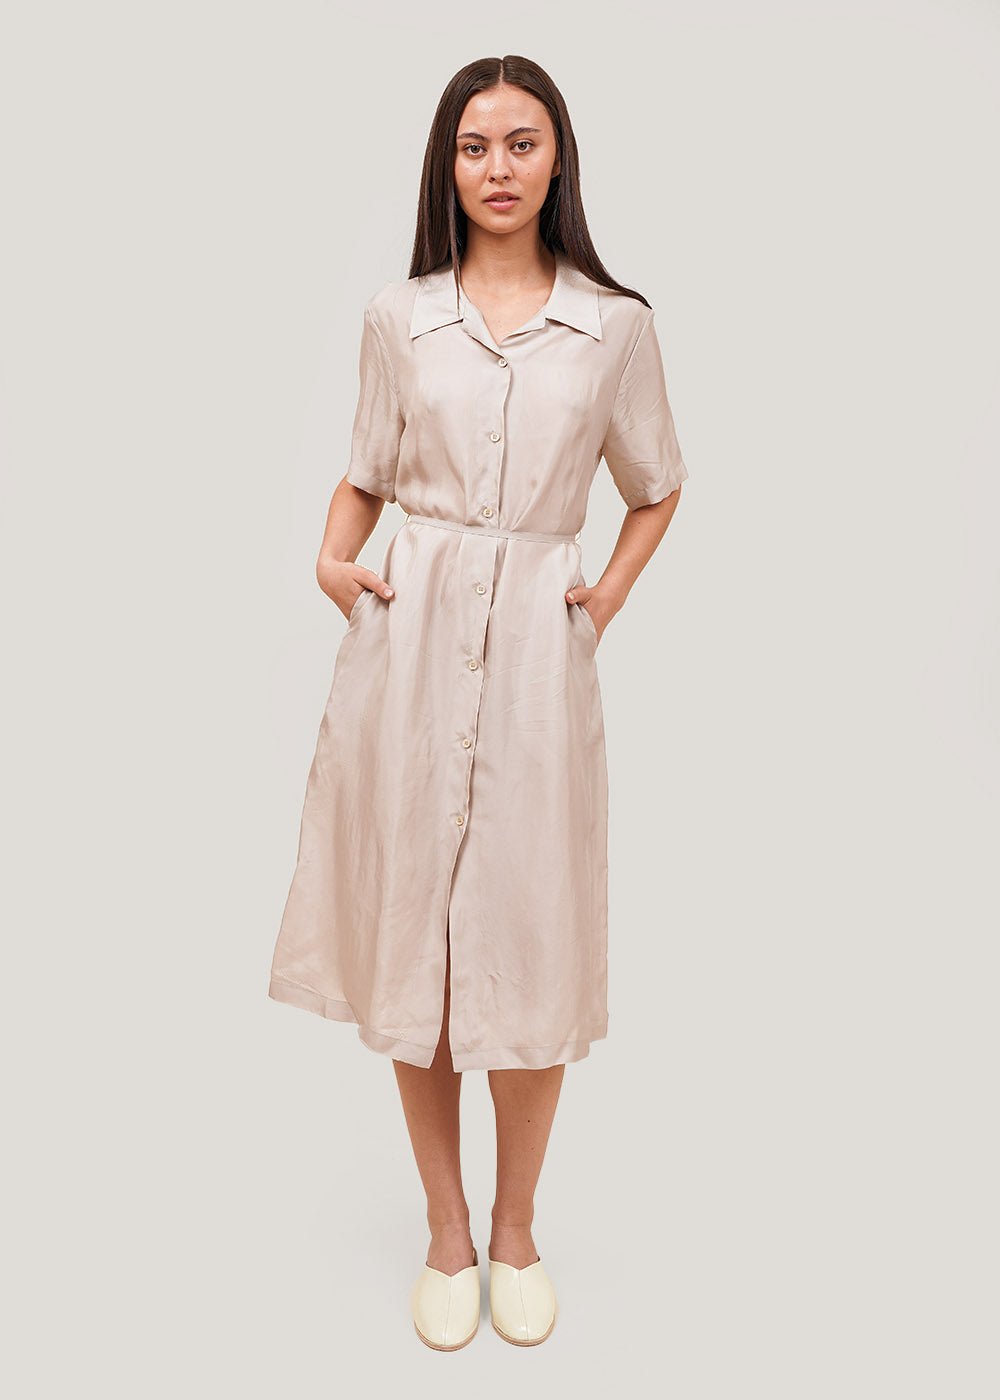 Cupra Shirt Dress in Beige by AMOMENTO – New Classics Studios